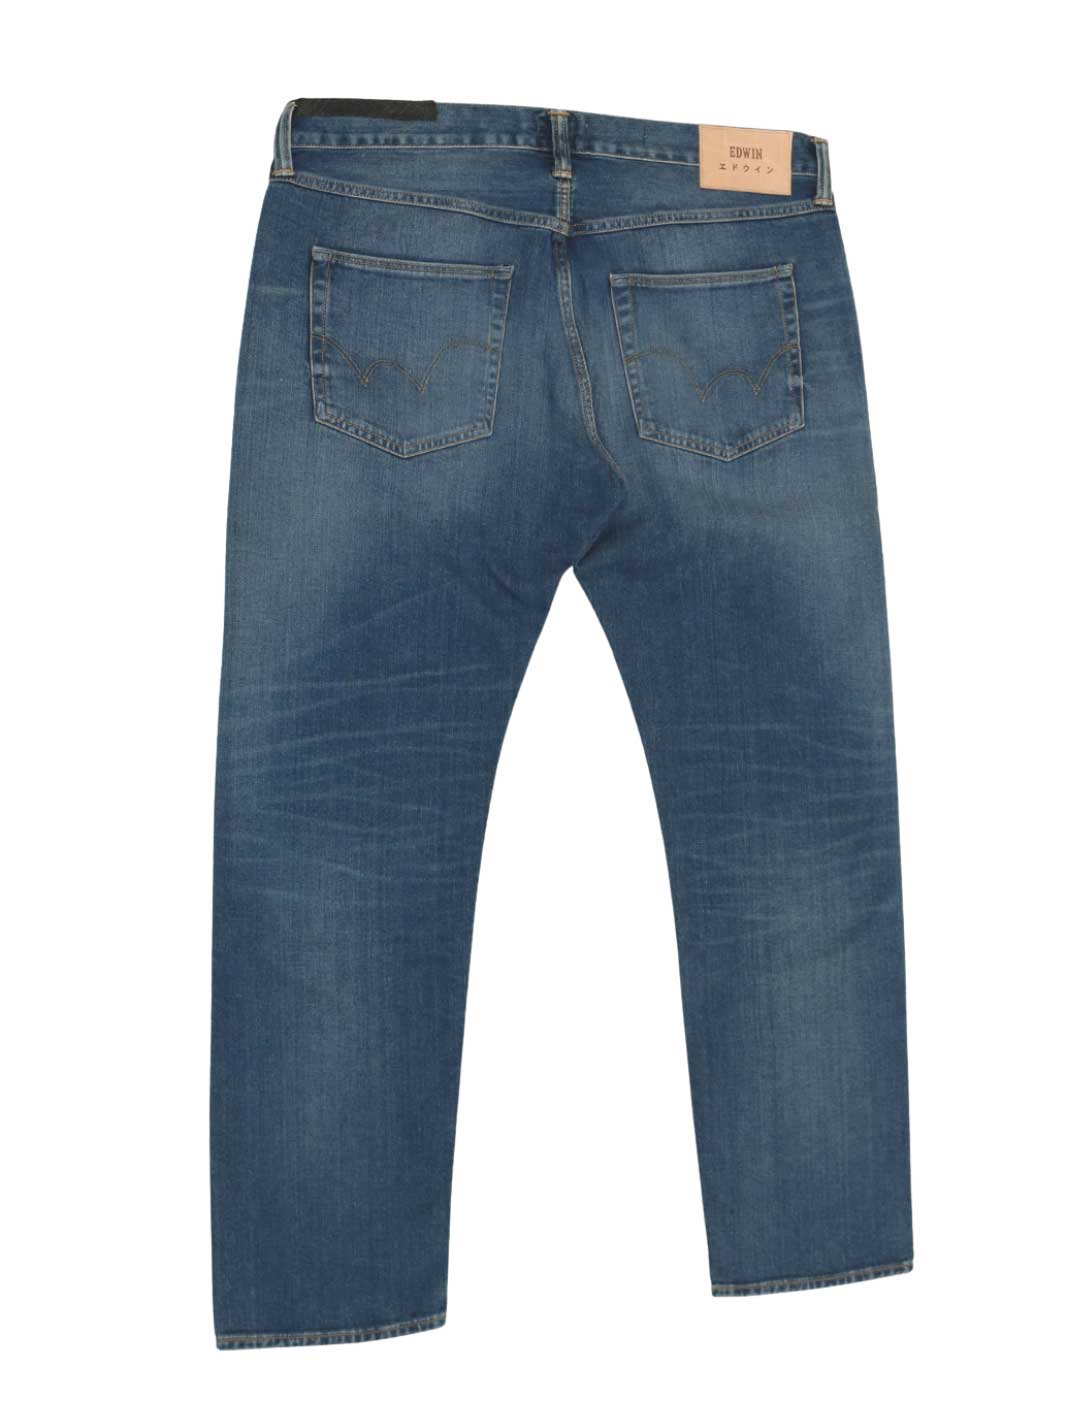 Herren upcyling Jeans Größe 38/32 regular straight fit 